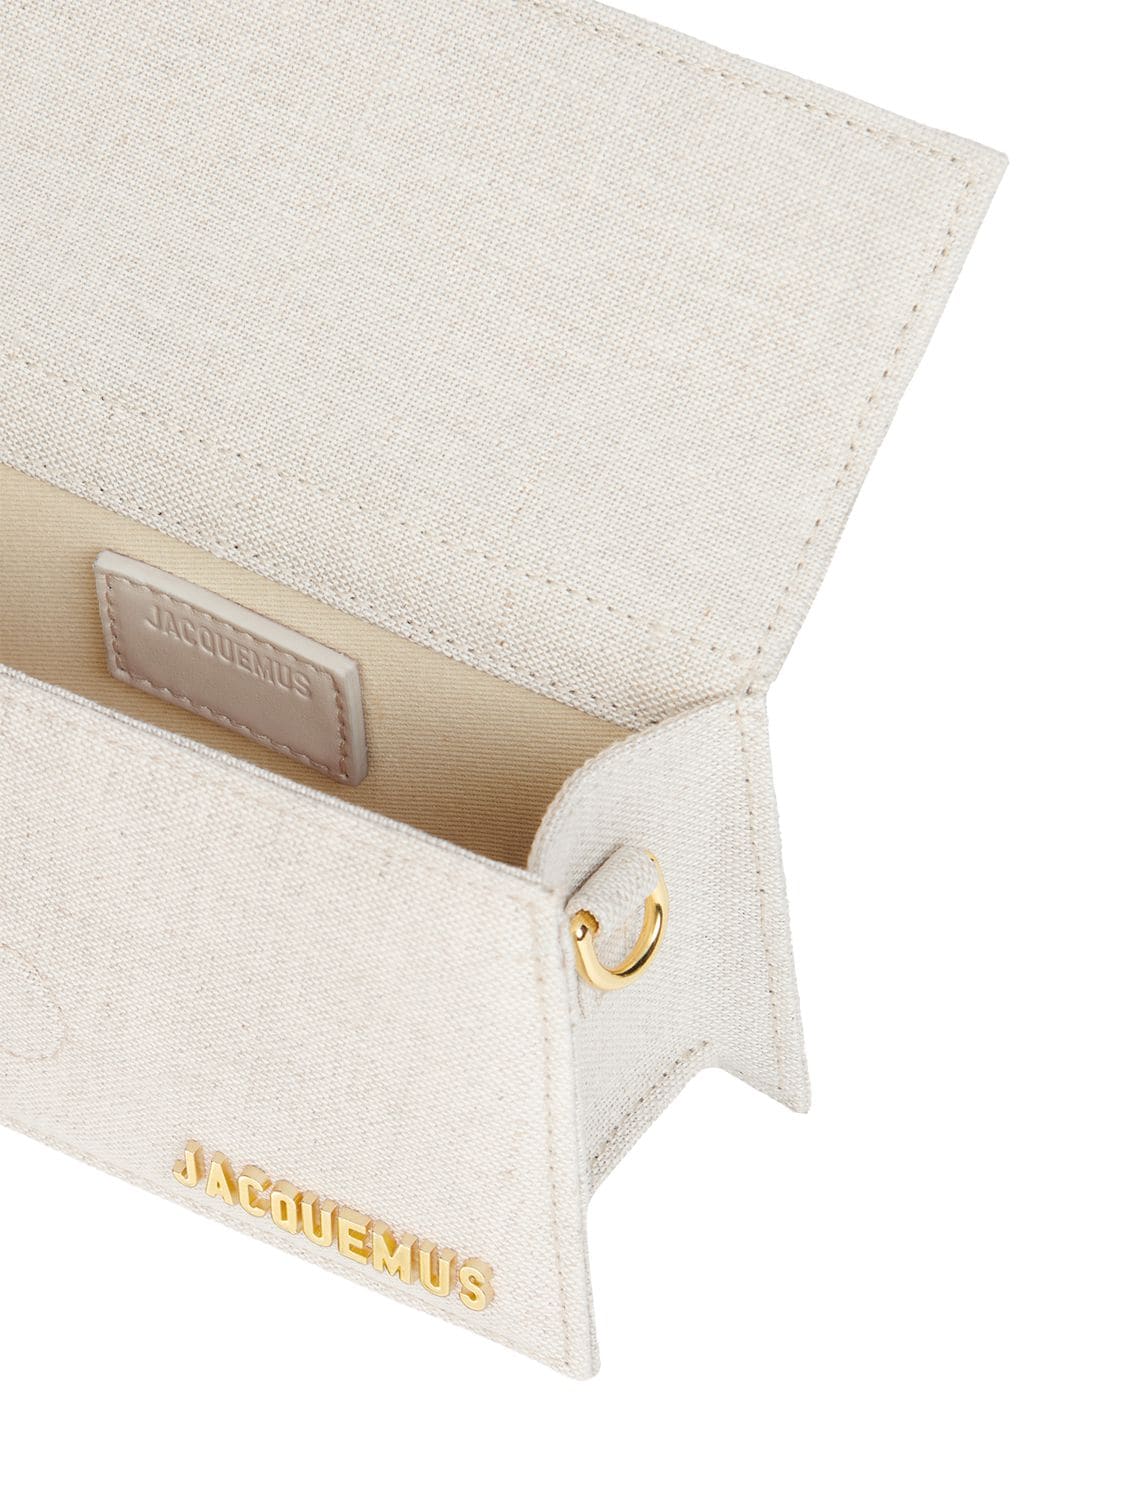 Shop Jacquemus Le Bambino Cotton & Linen Top Handle Bag In Light Greige